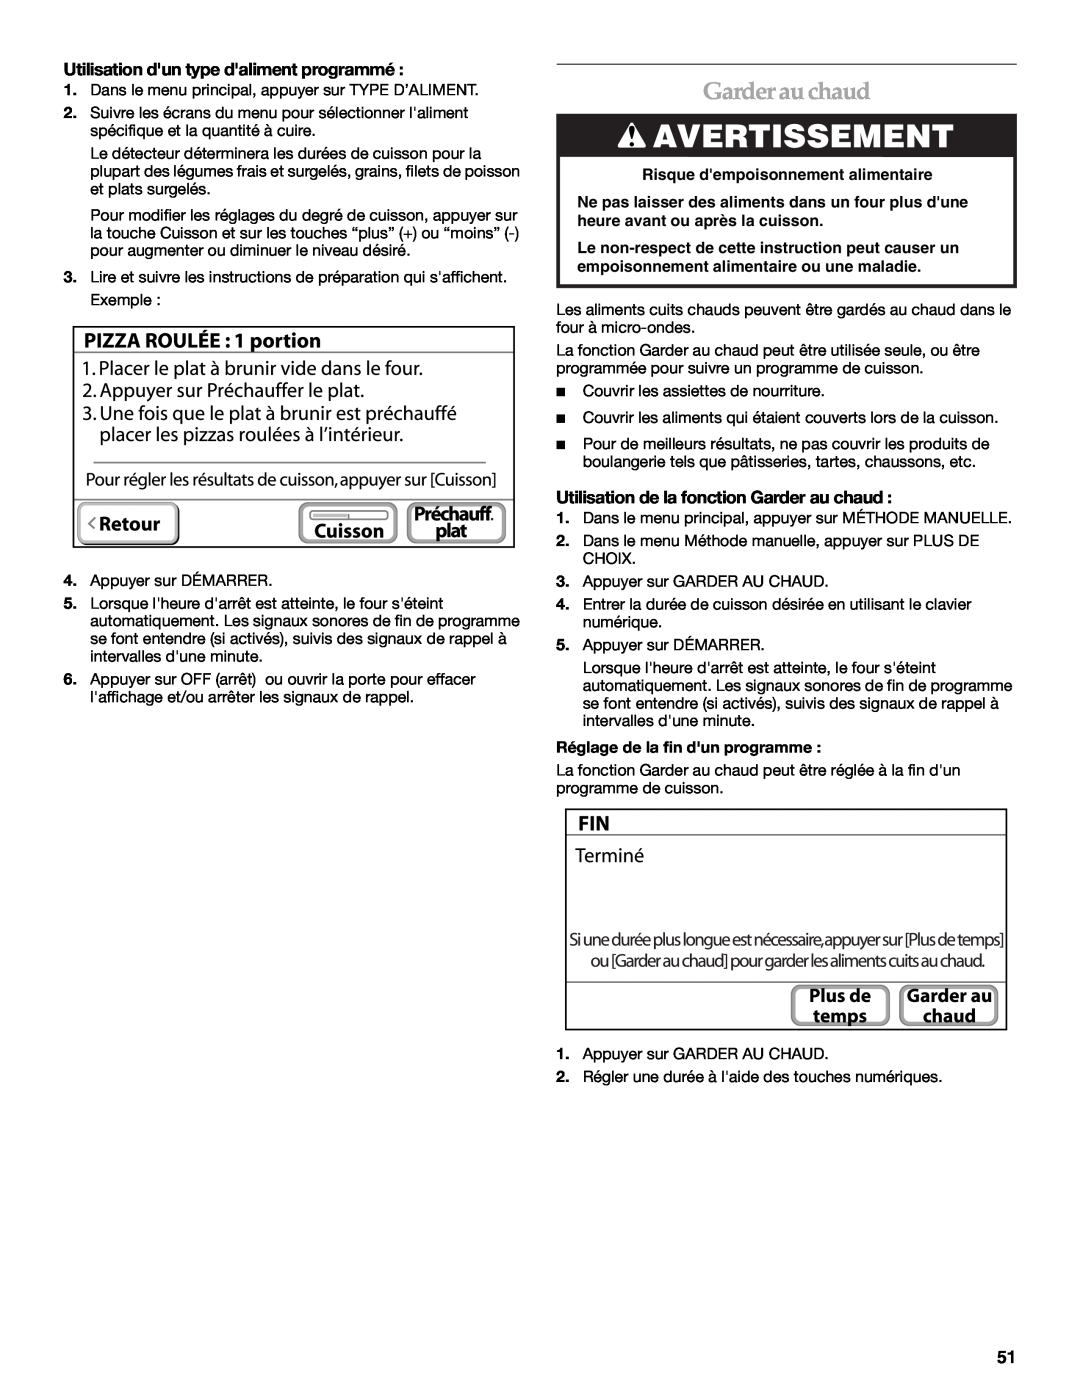 KitchenAid KEHU309 manual Avertissement, Garderauchaud, Utilisation dun type daliment programmé 